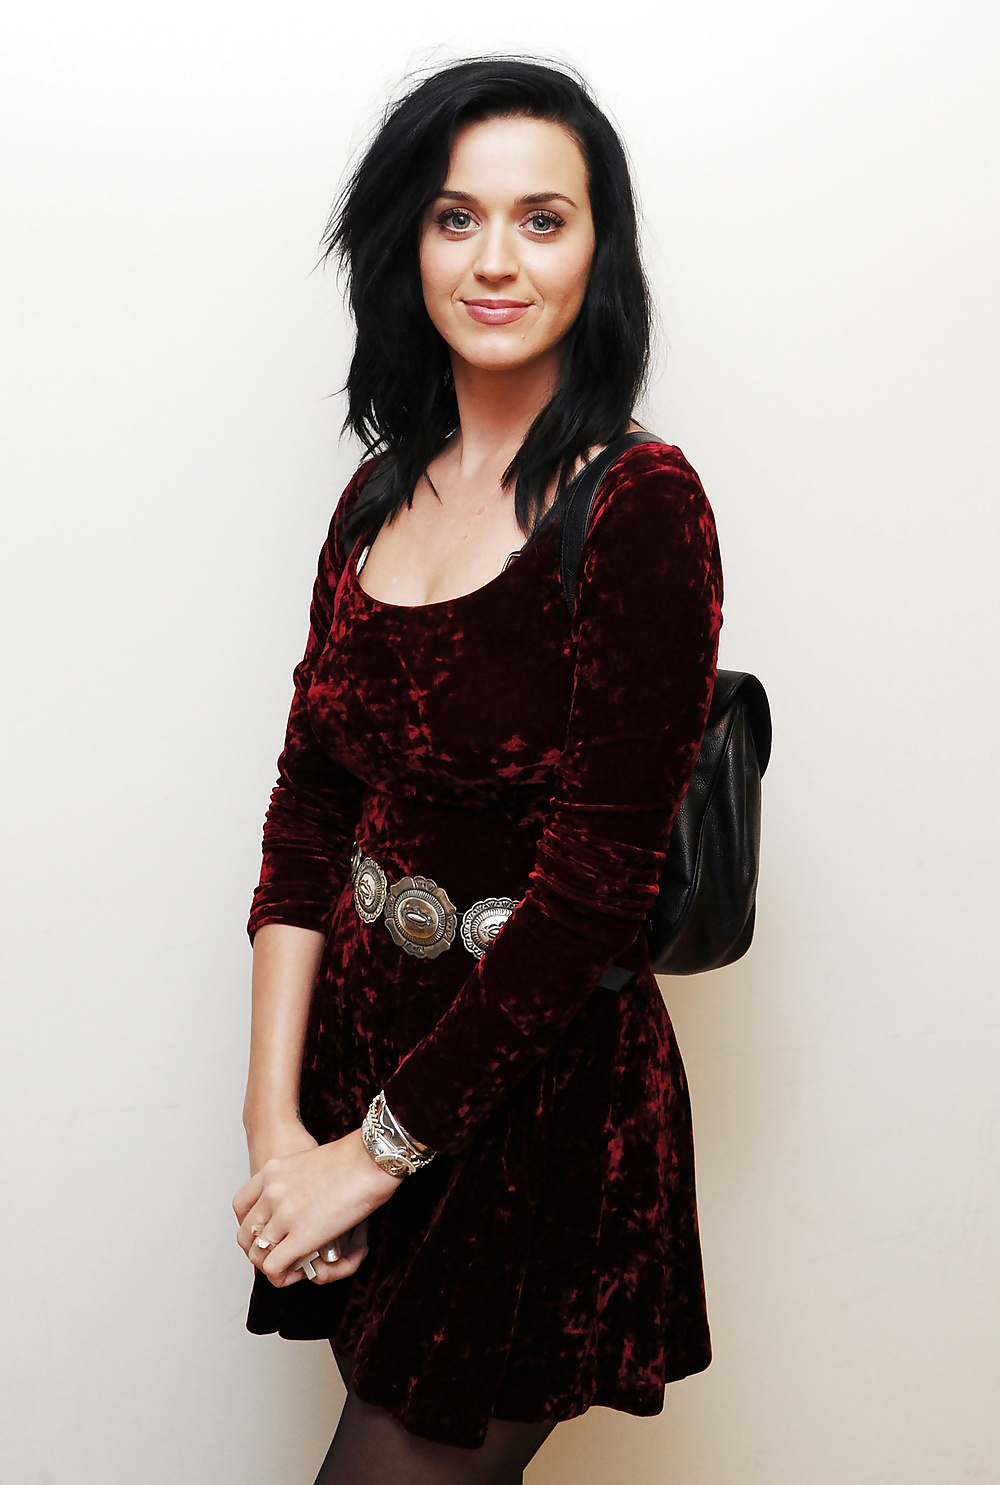 Katy Perry 6 #31947185